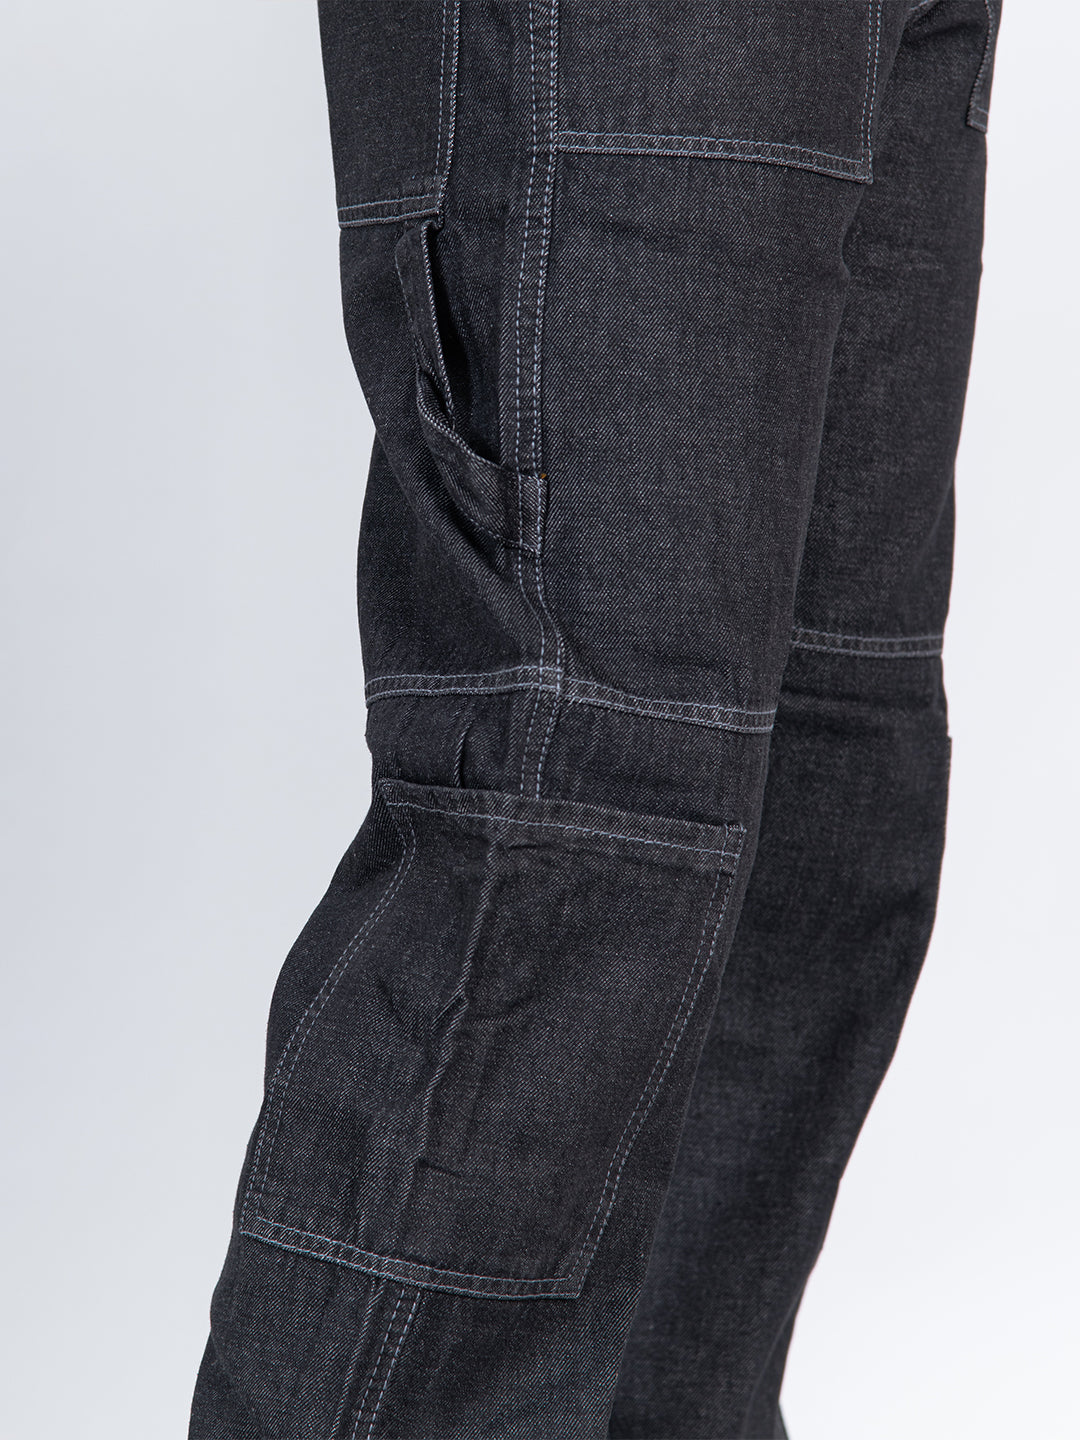 adidas Men's Essential Tricot Zip Pants (Medium, Black/Carbon/Black) -  Walmart.com